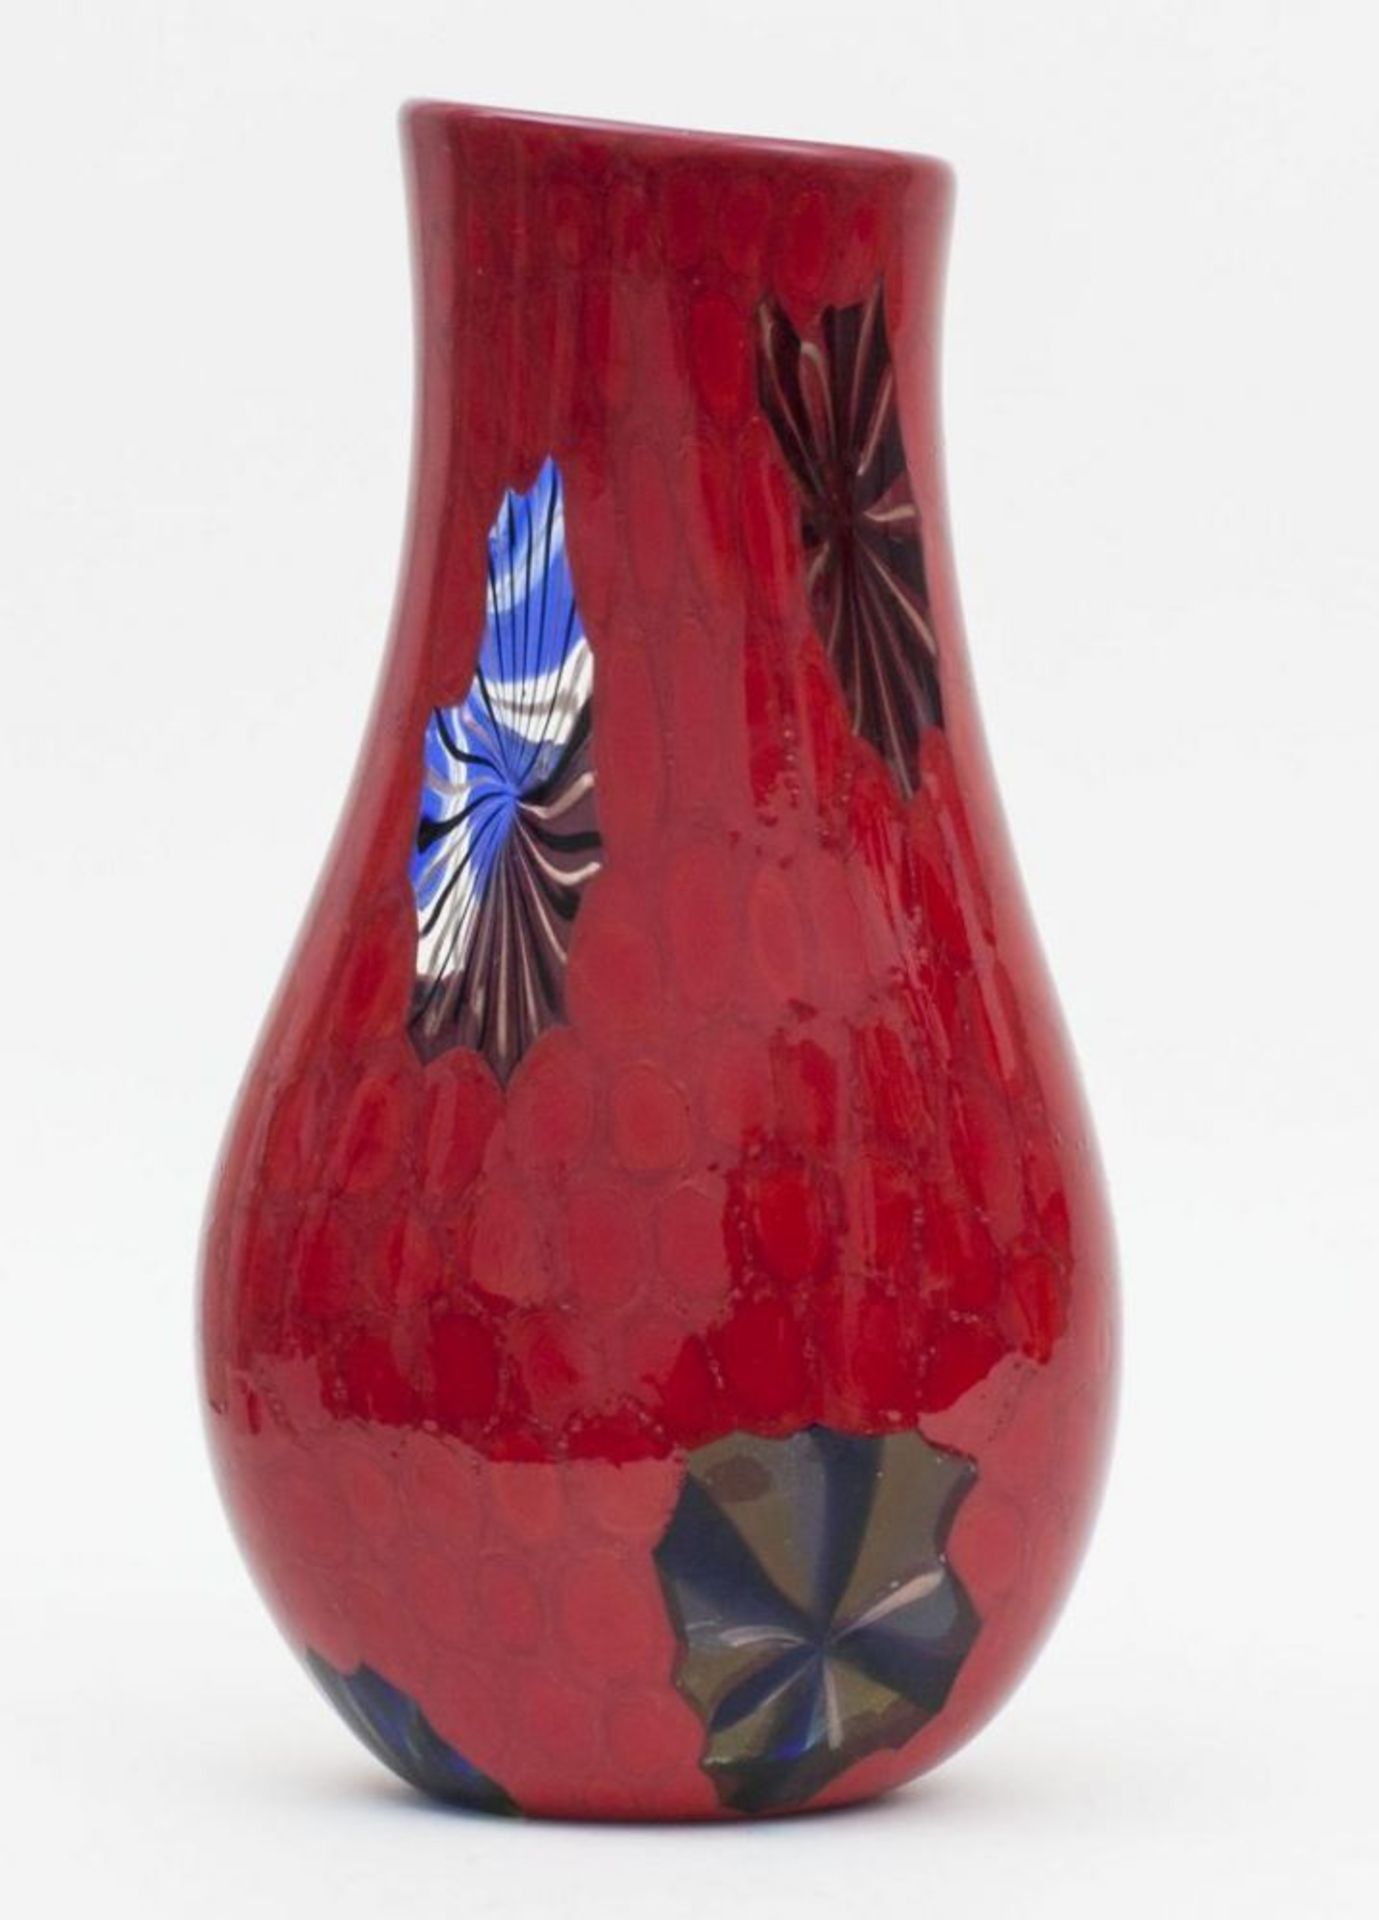 Vase Vittorio Ferro, Murano, 2. Hälfte 20. Jh.  ovale Keulenform. Farbloses Glas, rot überfangen mit